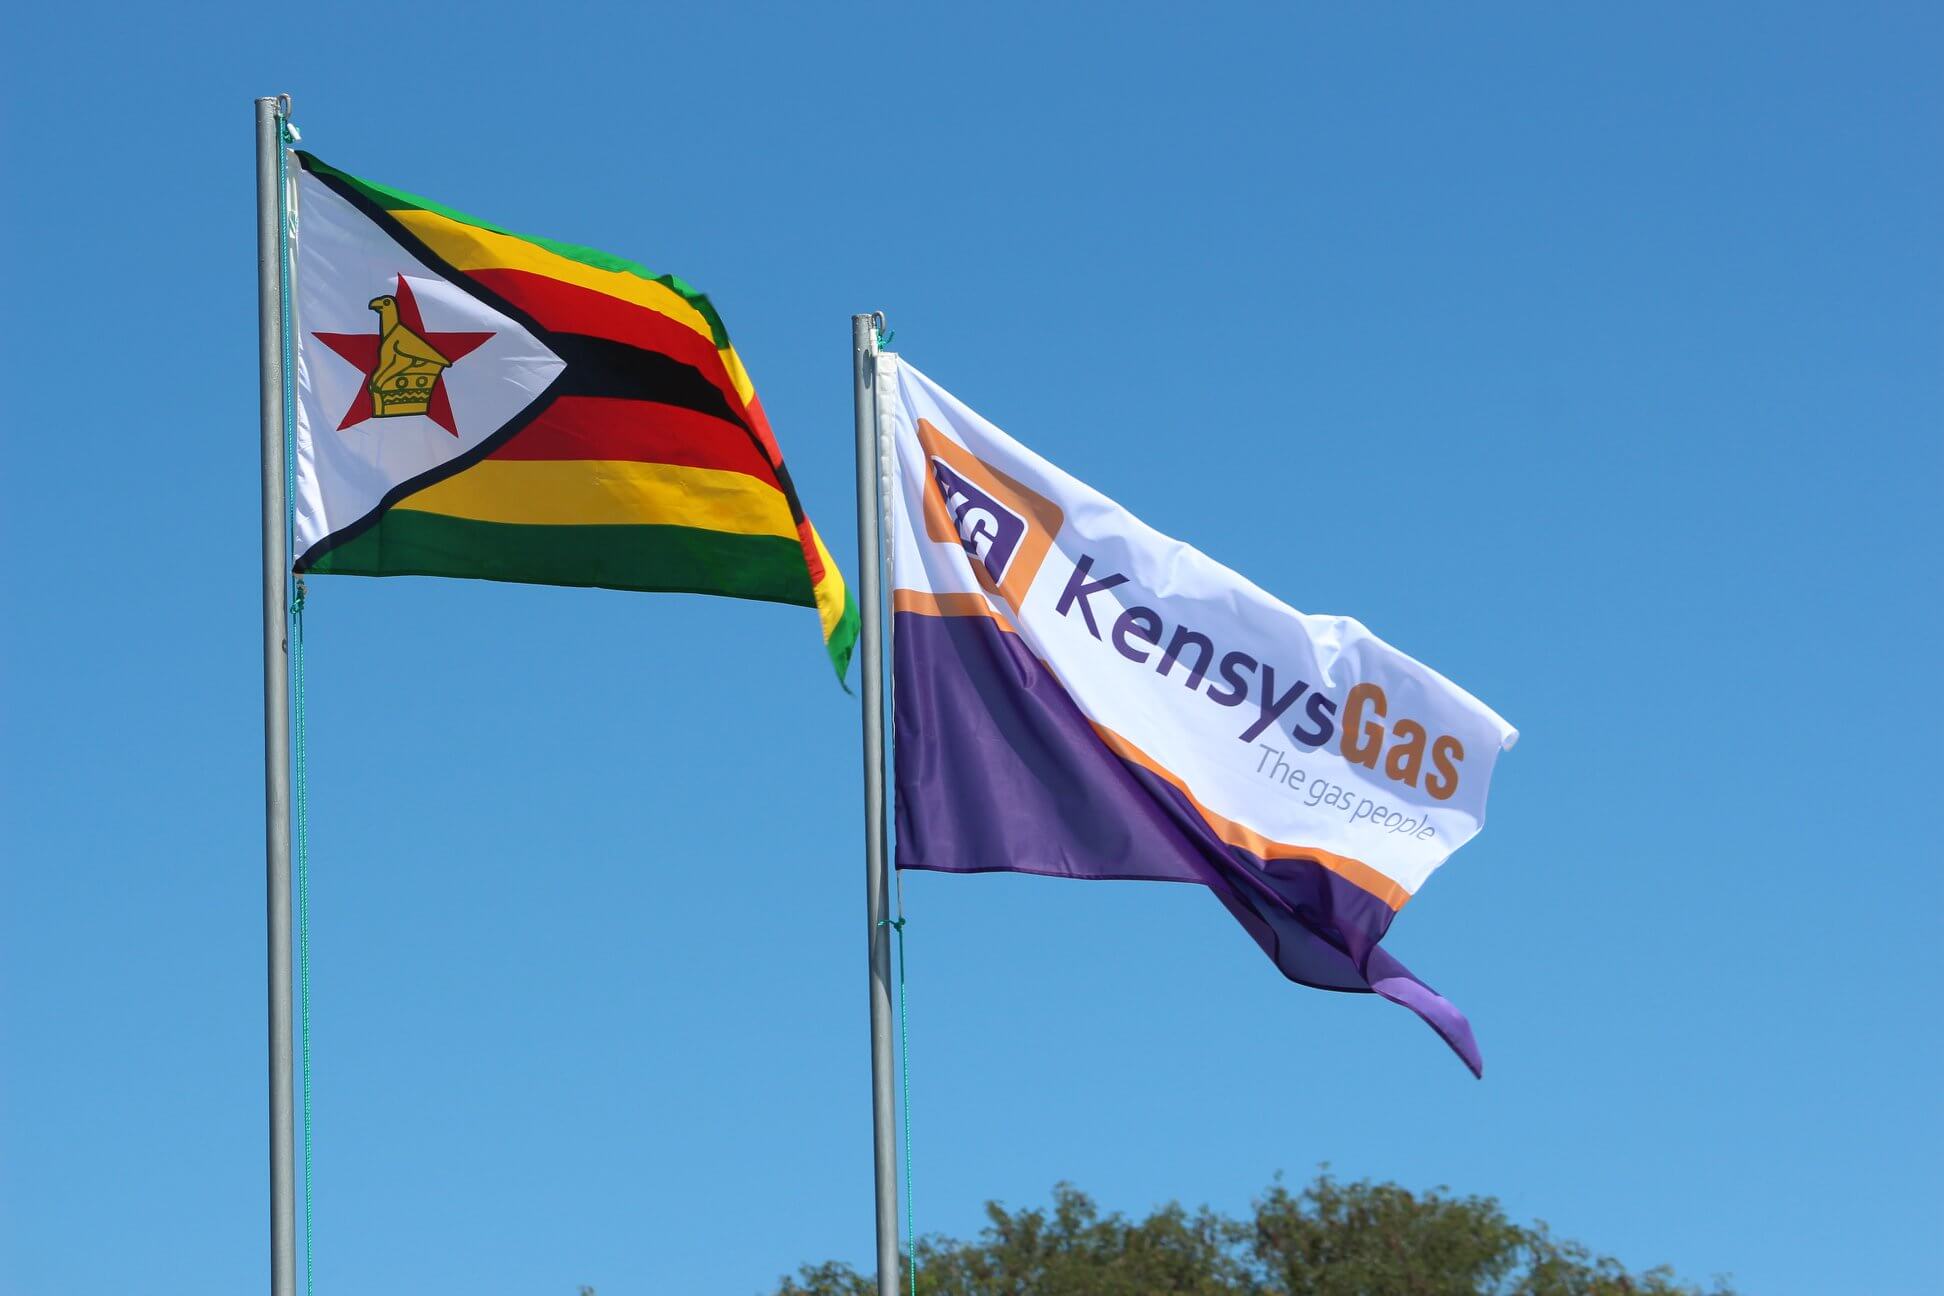 kensys gas flag and Zimbabwean flag